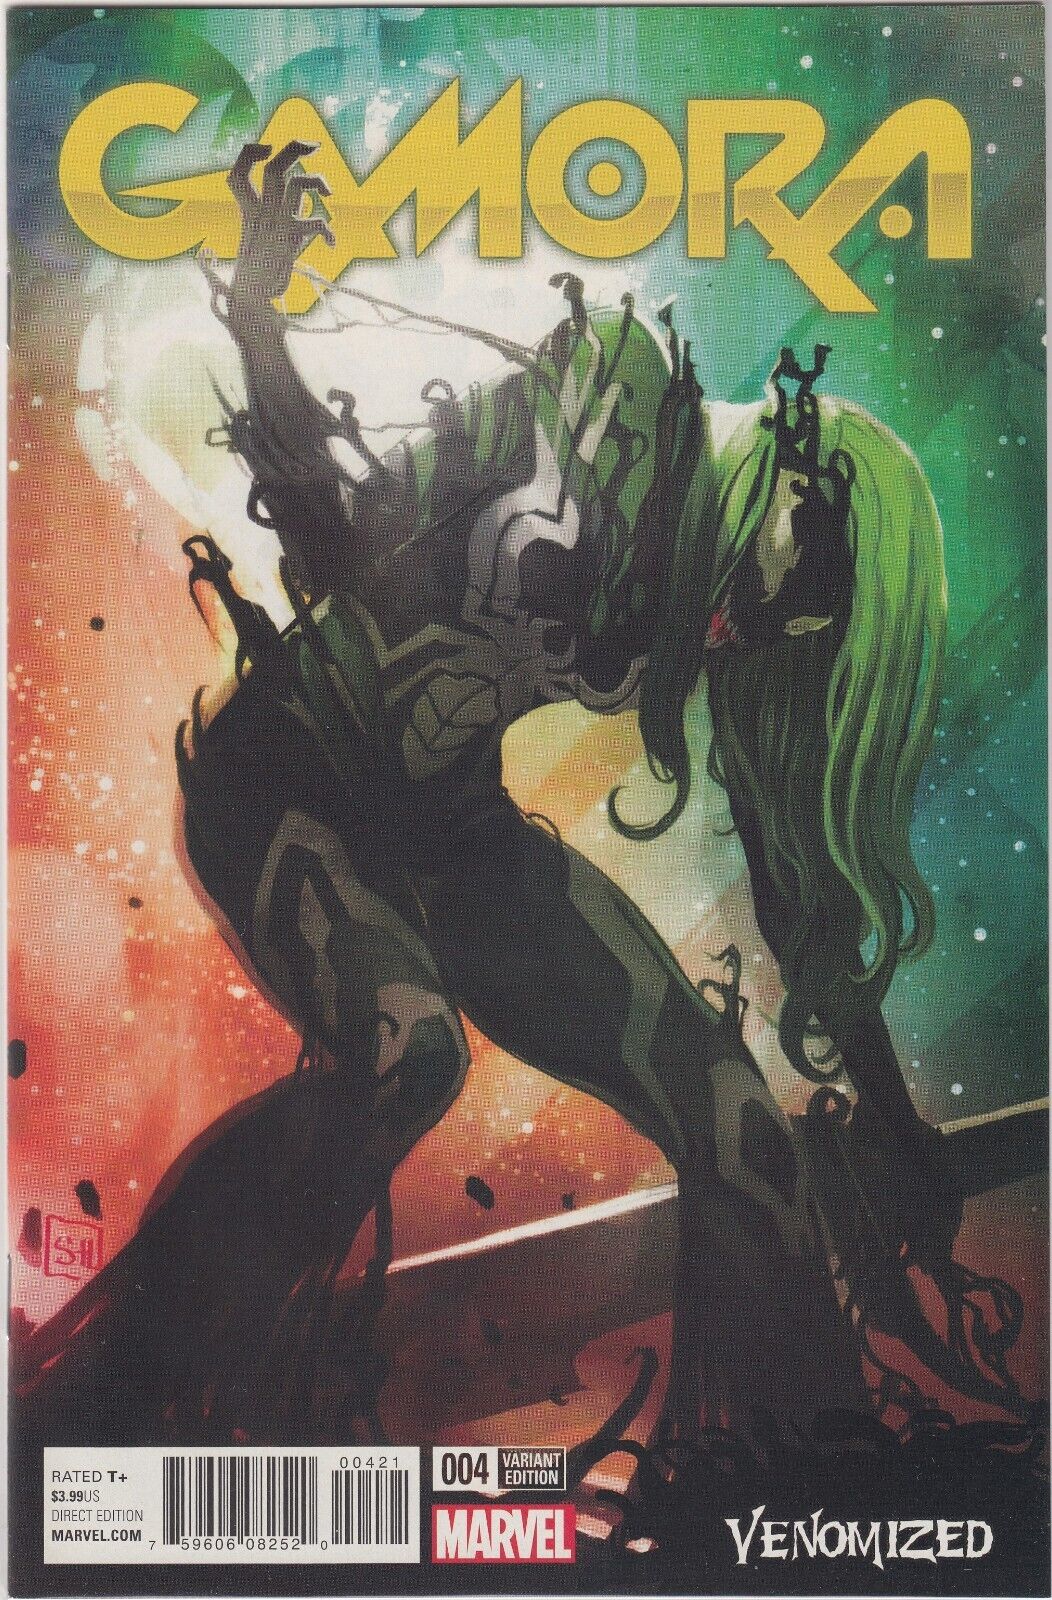 Gamora #4 - Stephanie Hans - Venomized Variant